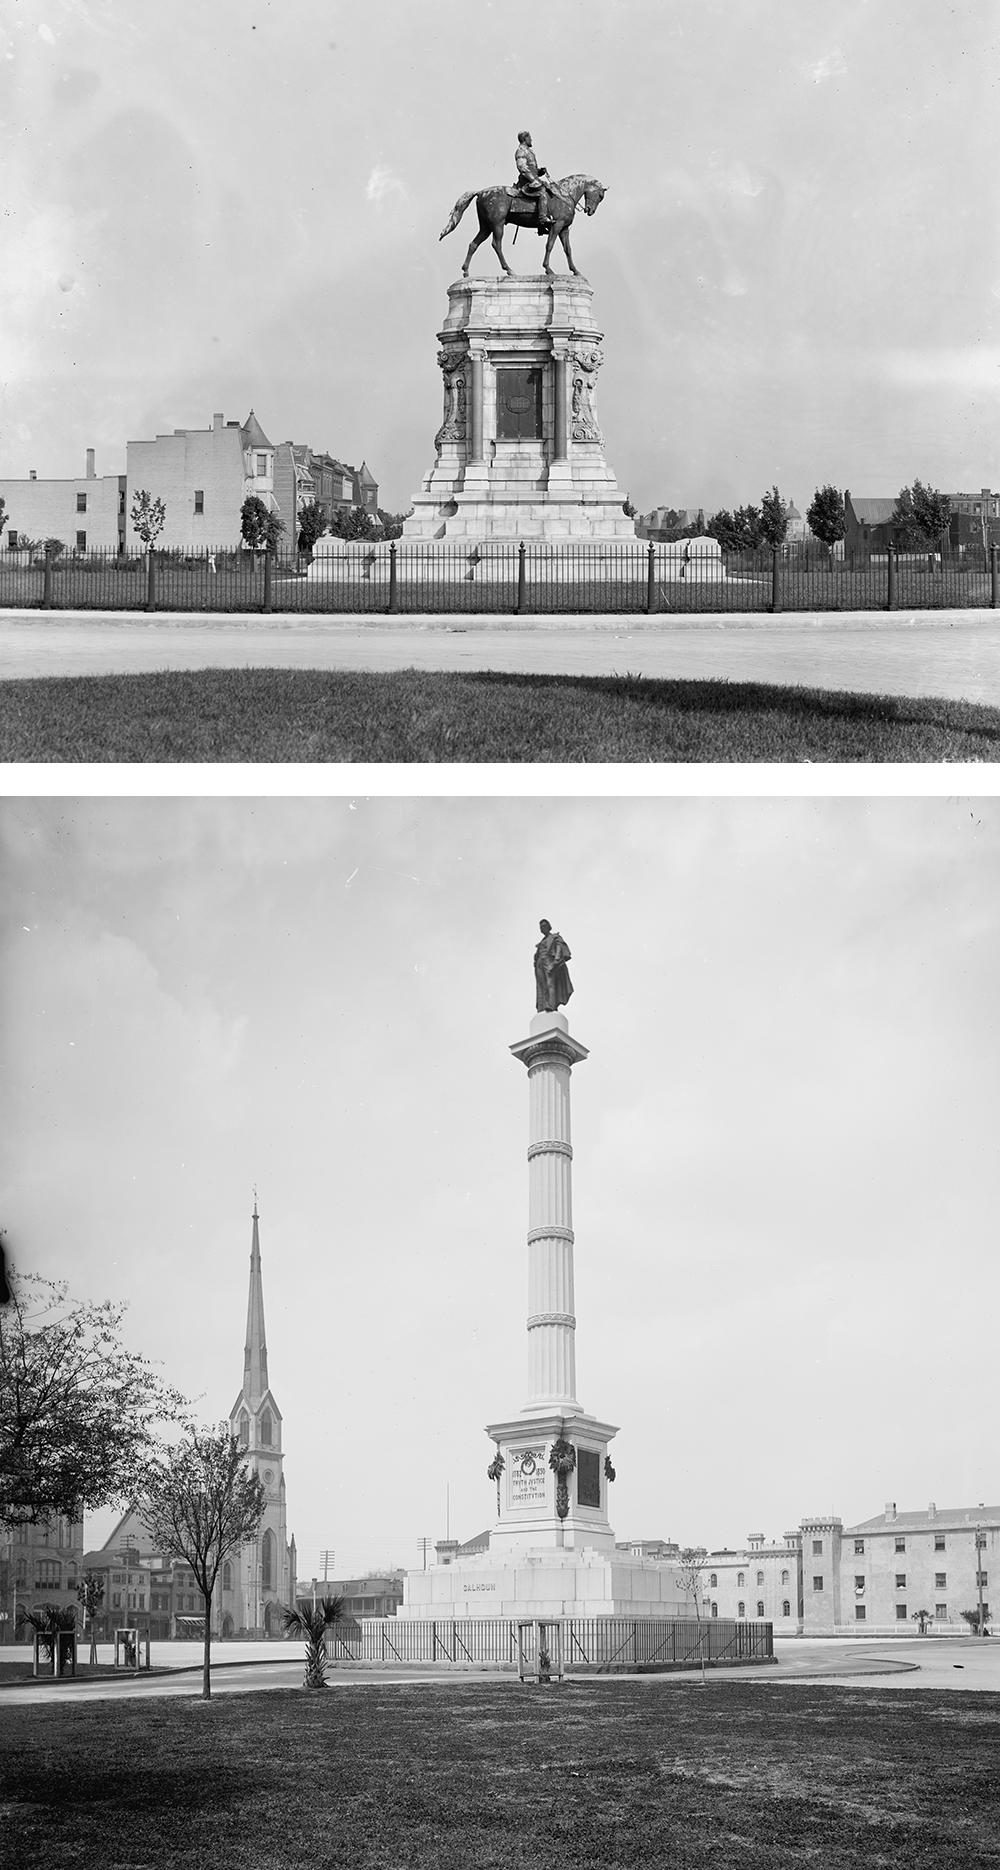 Top: Robert E. Lee monument, Richmond, Virginia, c. 1905. Photograph by Detroit Publishing Co. Bottom: John C. Calhoun monument, Charleston, South Carolina, c. 1901. Photograph by Detroit Publishing Co. Library of Congress, Prints and Photographs Division.